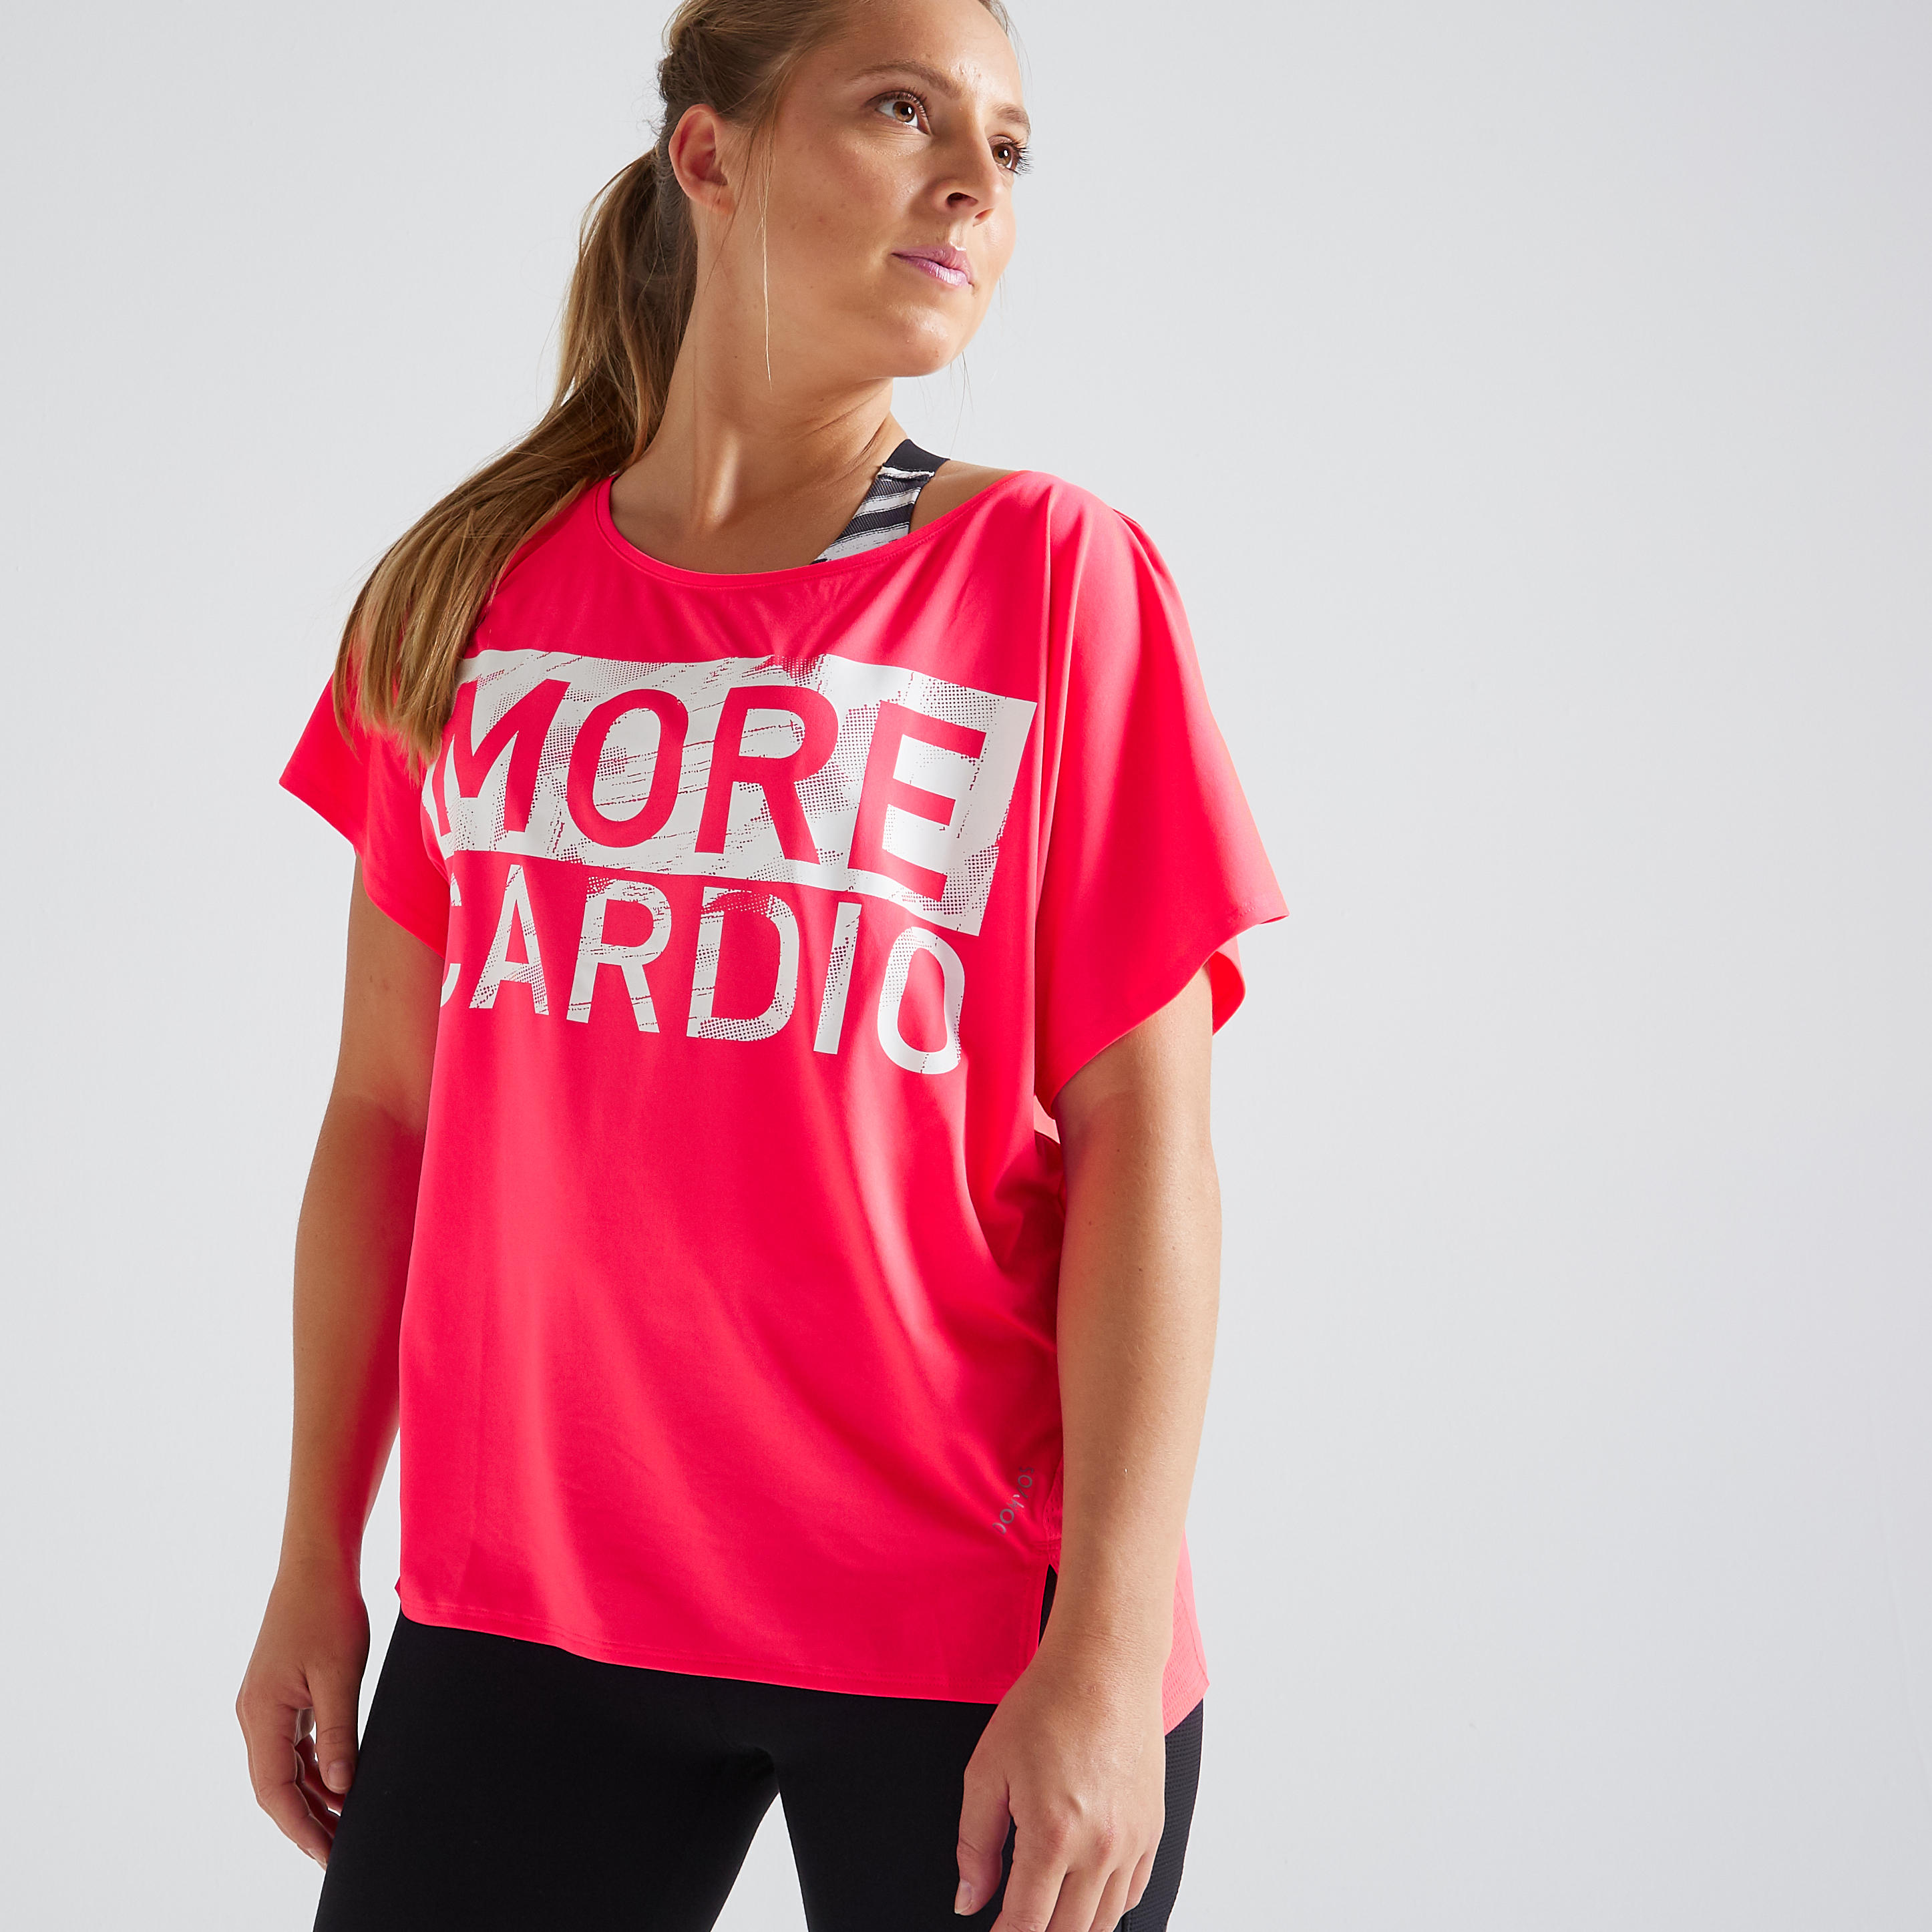 decathlon sports t shirts women's